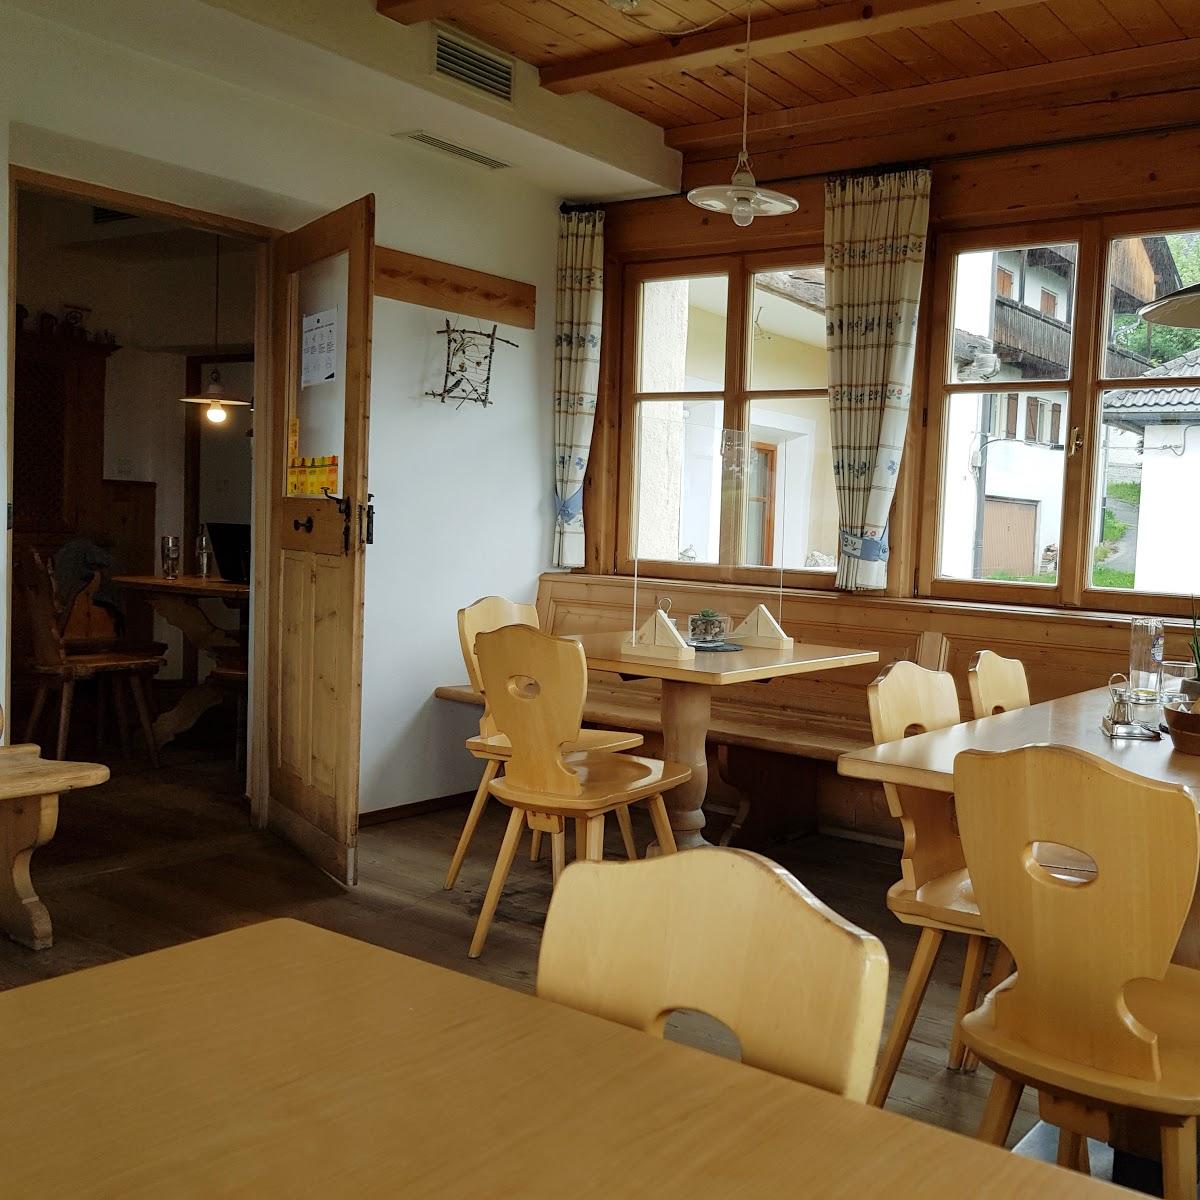 Restaurant "Gasthaus Moar" in Vila di Sopra